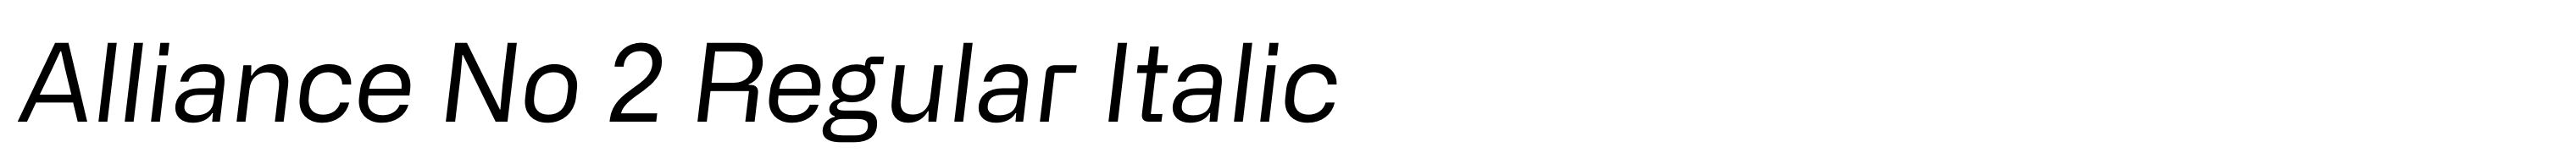 Alliance No 2 Regular Italic